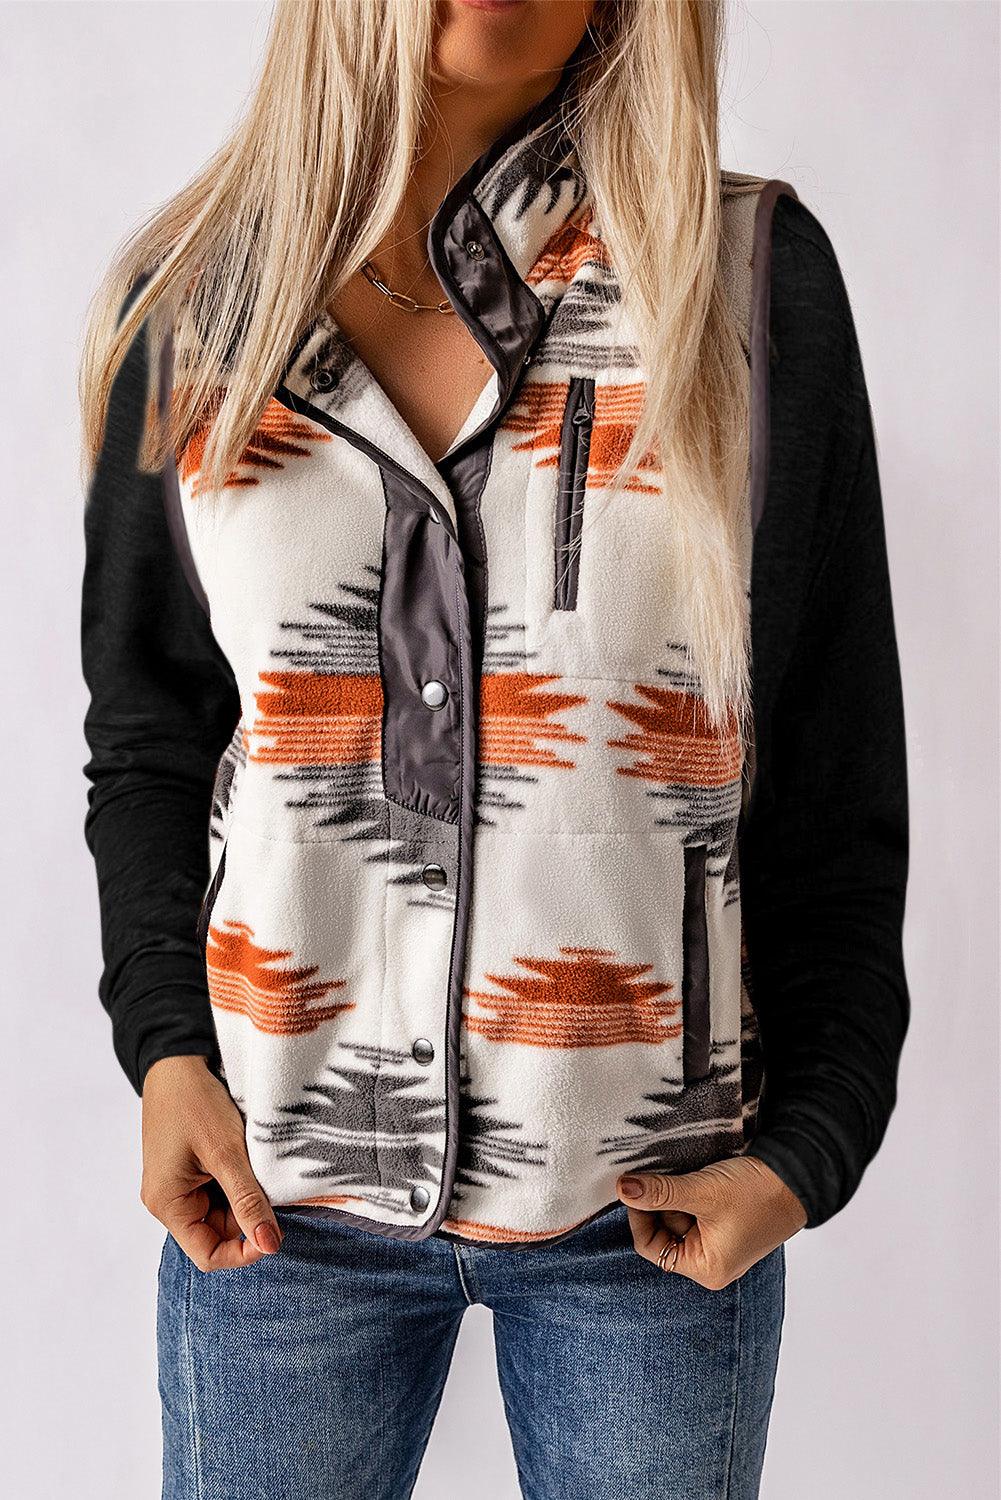 Multicolor Fuzzy Aztec Western Fashion Vest Jacket - L & M Kee, LLC